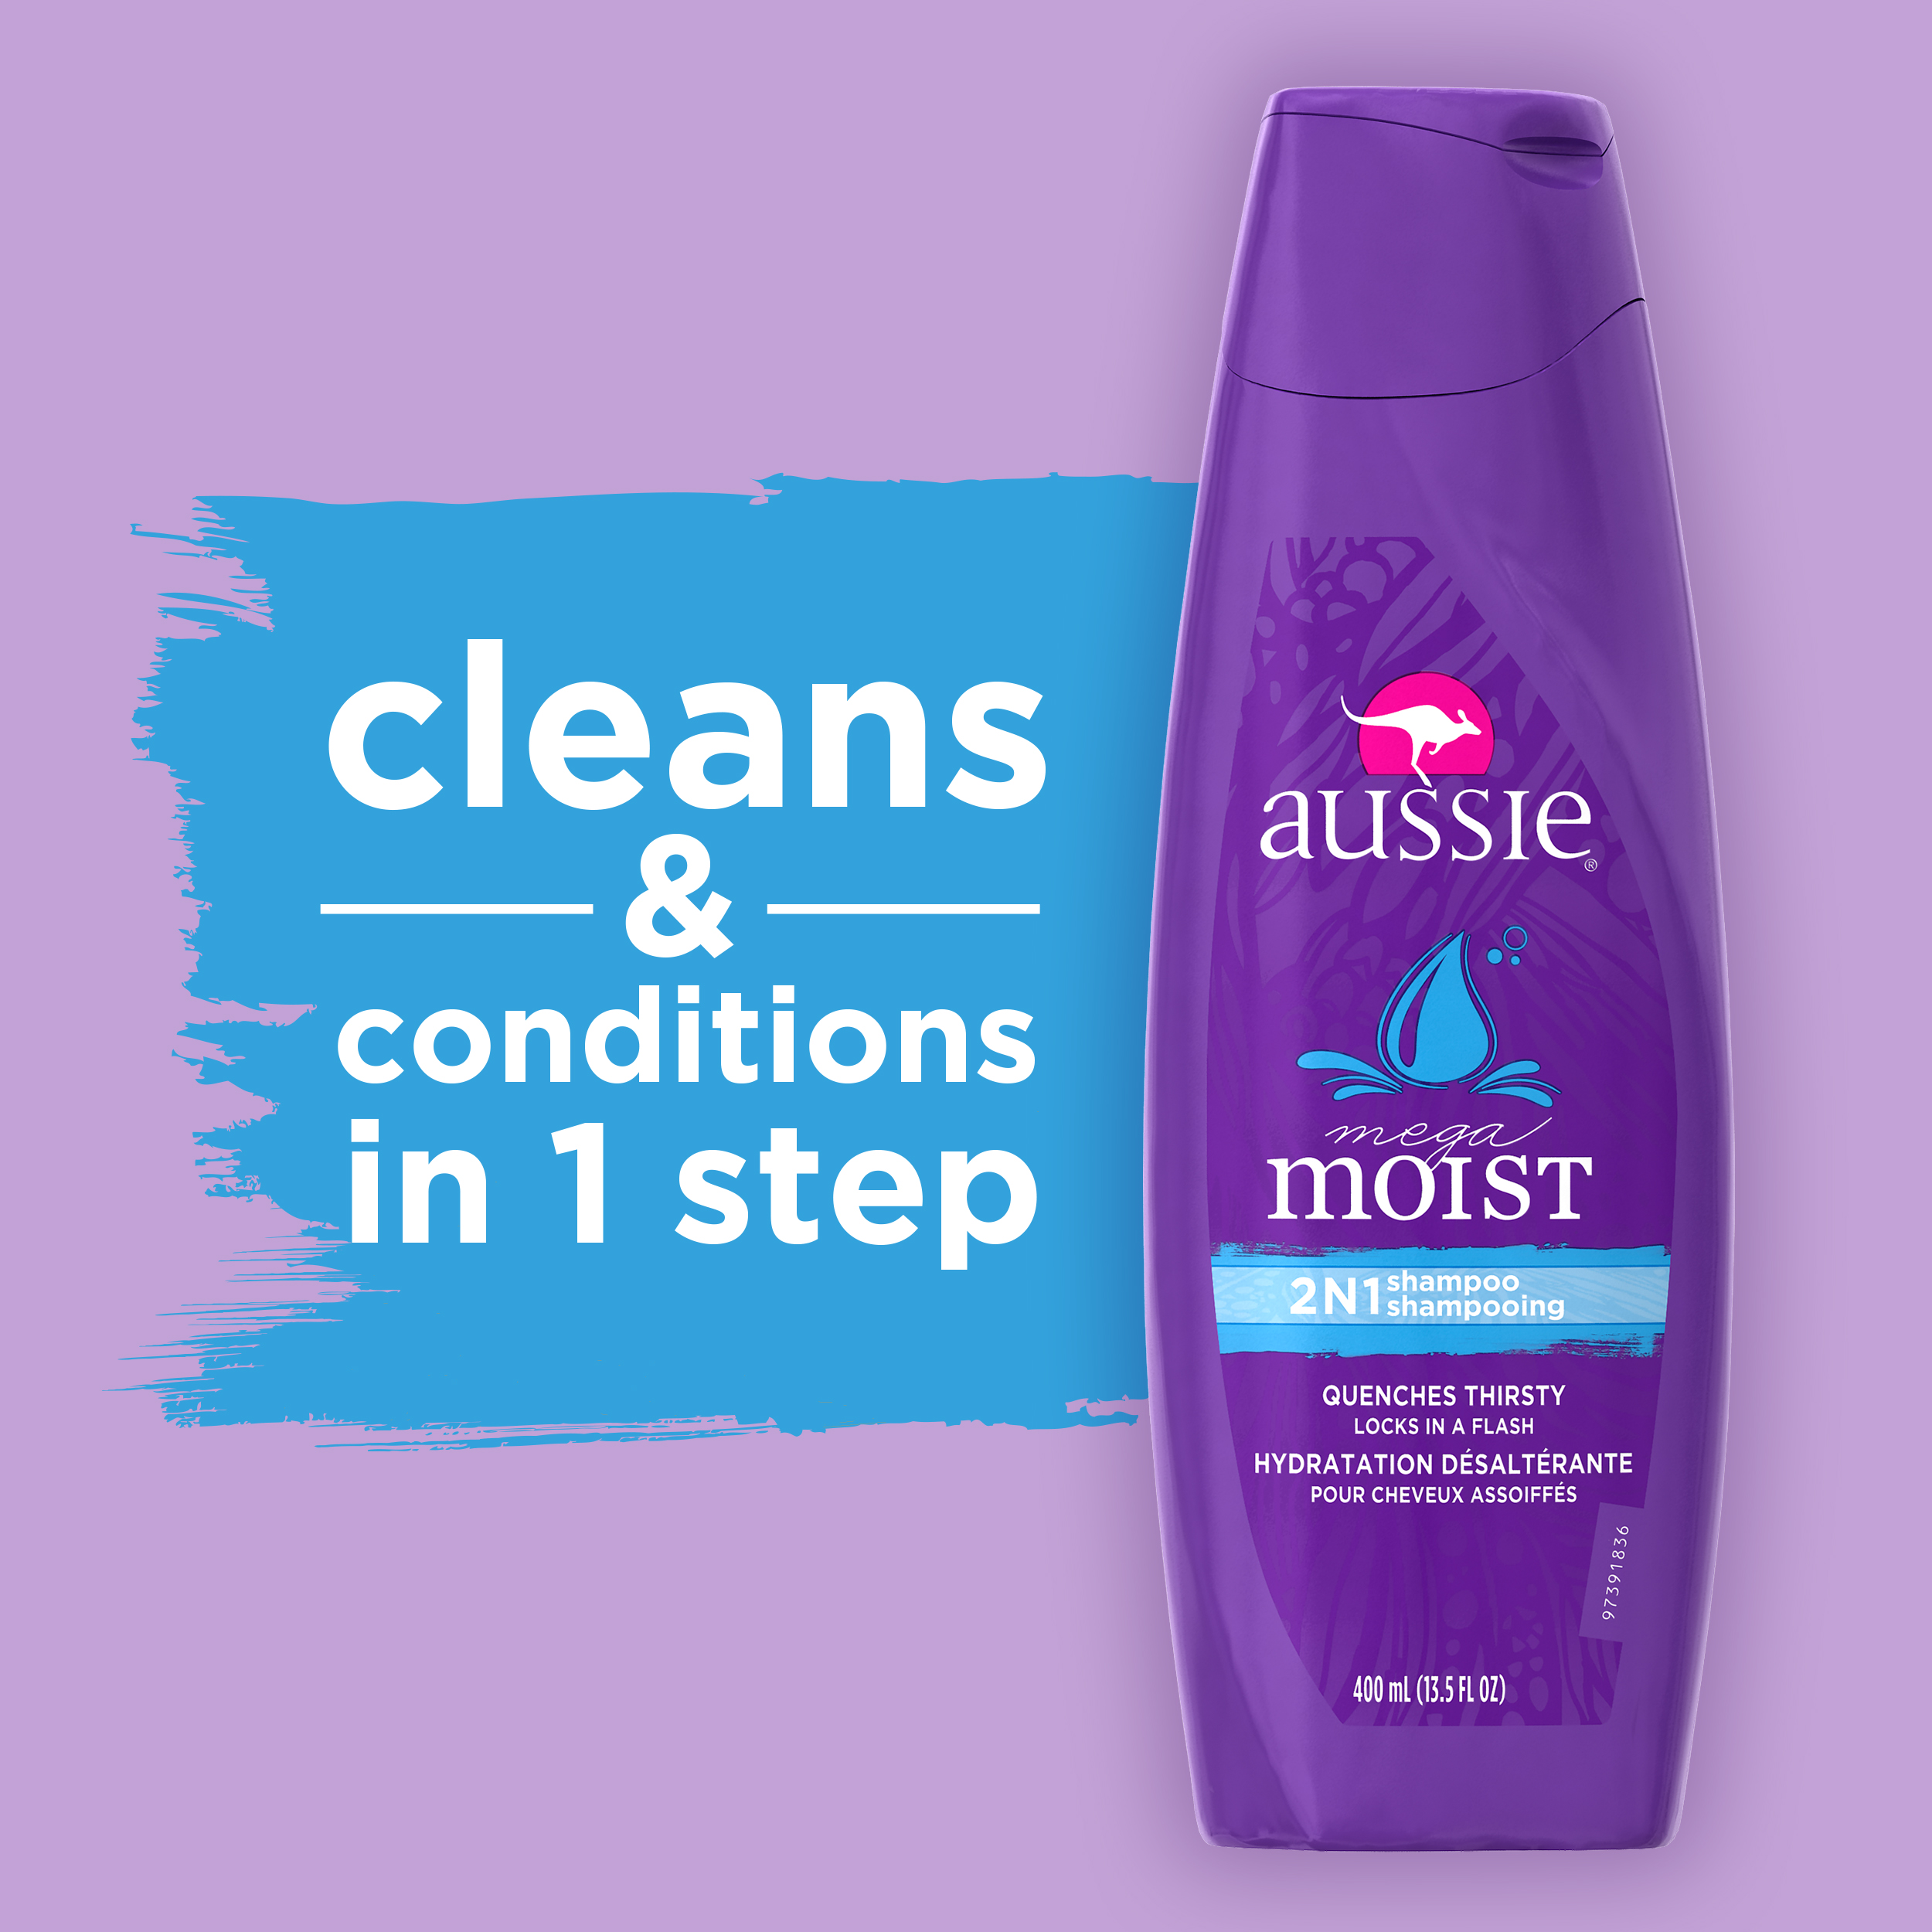 Aussie Mega Moist 2N1 Shampoo and Conditioner, 13.5 fl oz - image 4 of 9